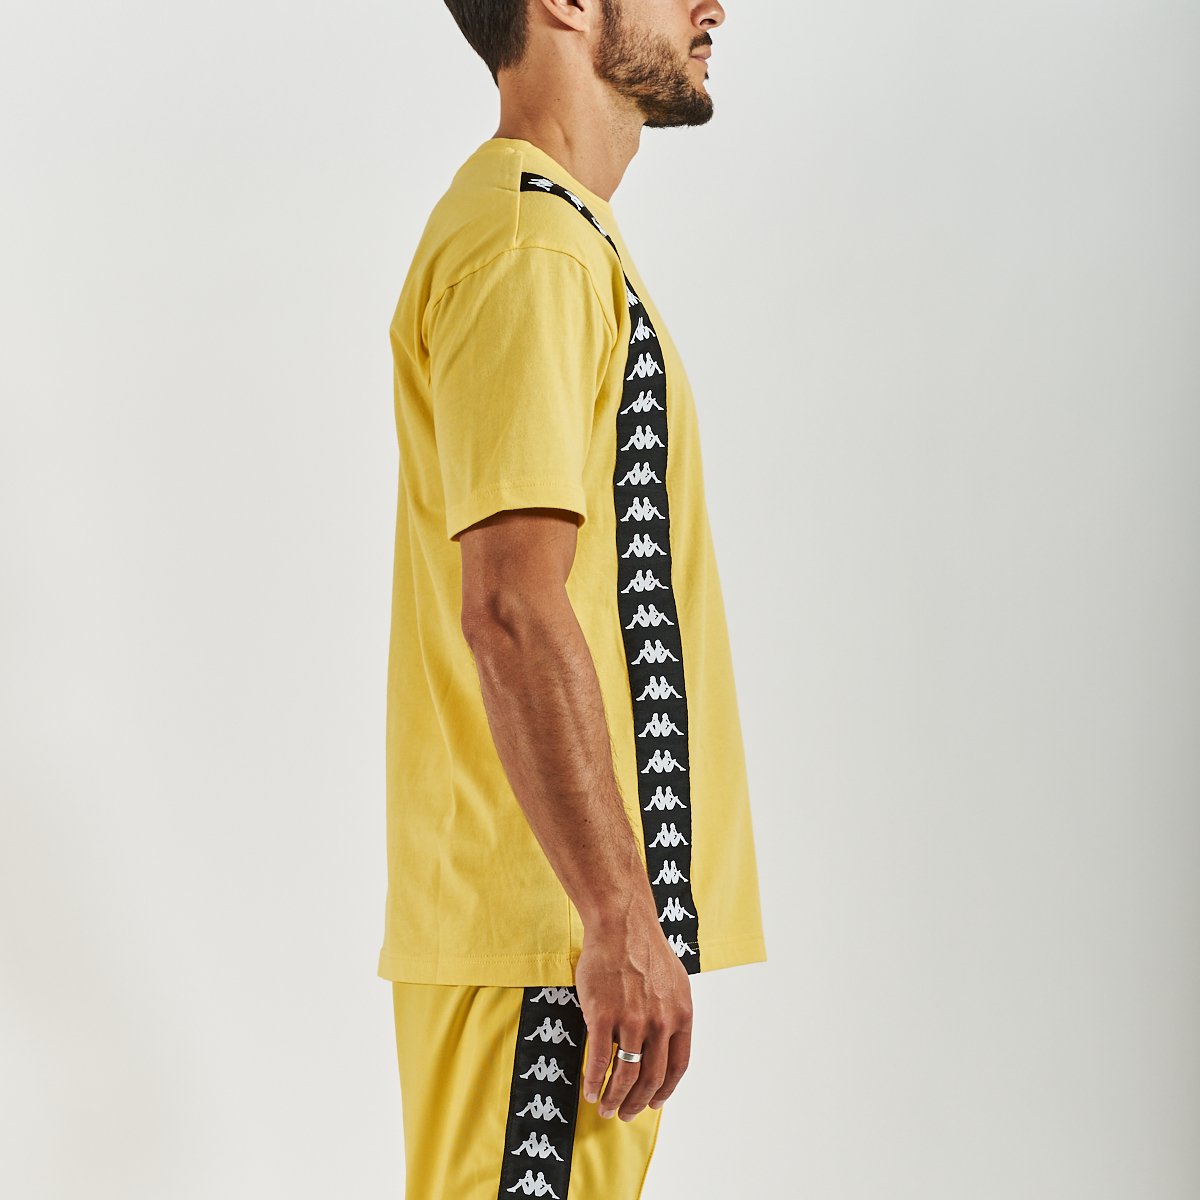 Camiseta Ecop hombre amarillo - Imagen 2